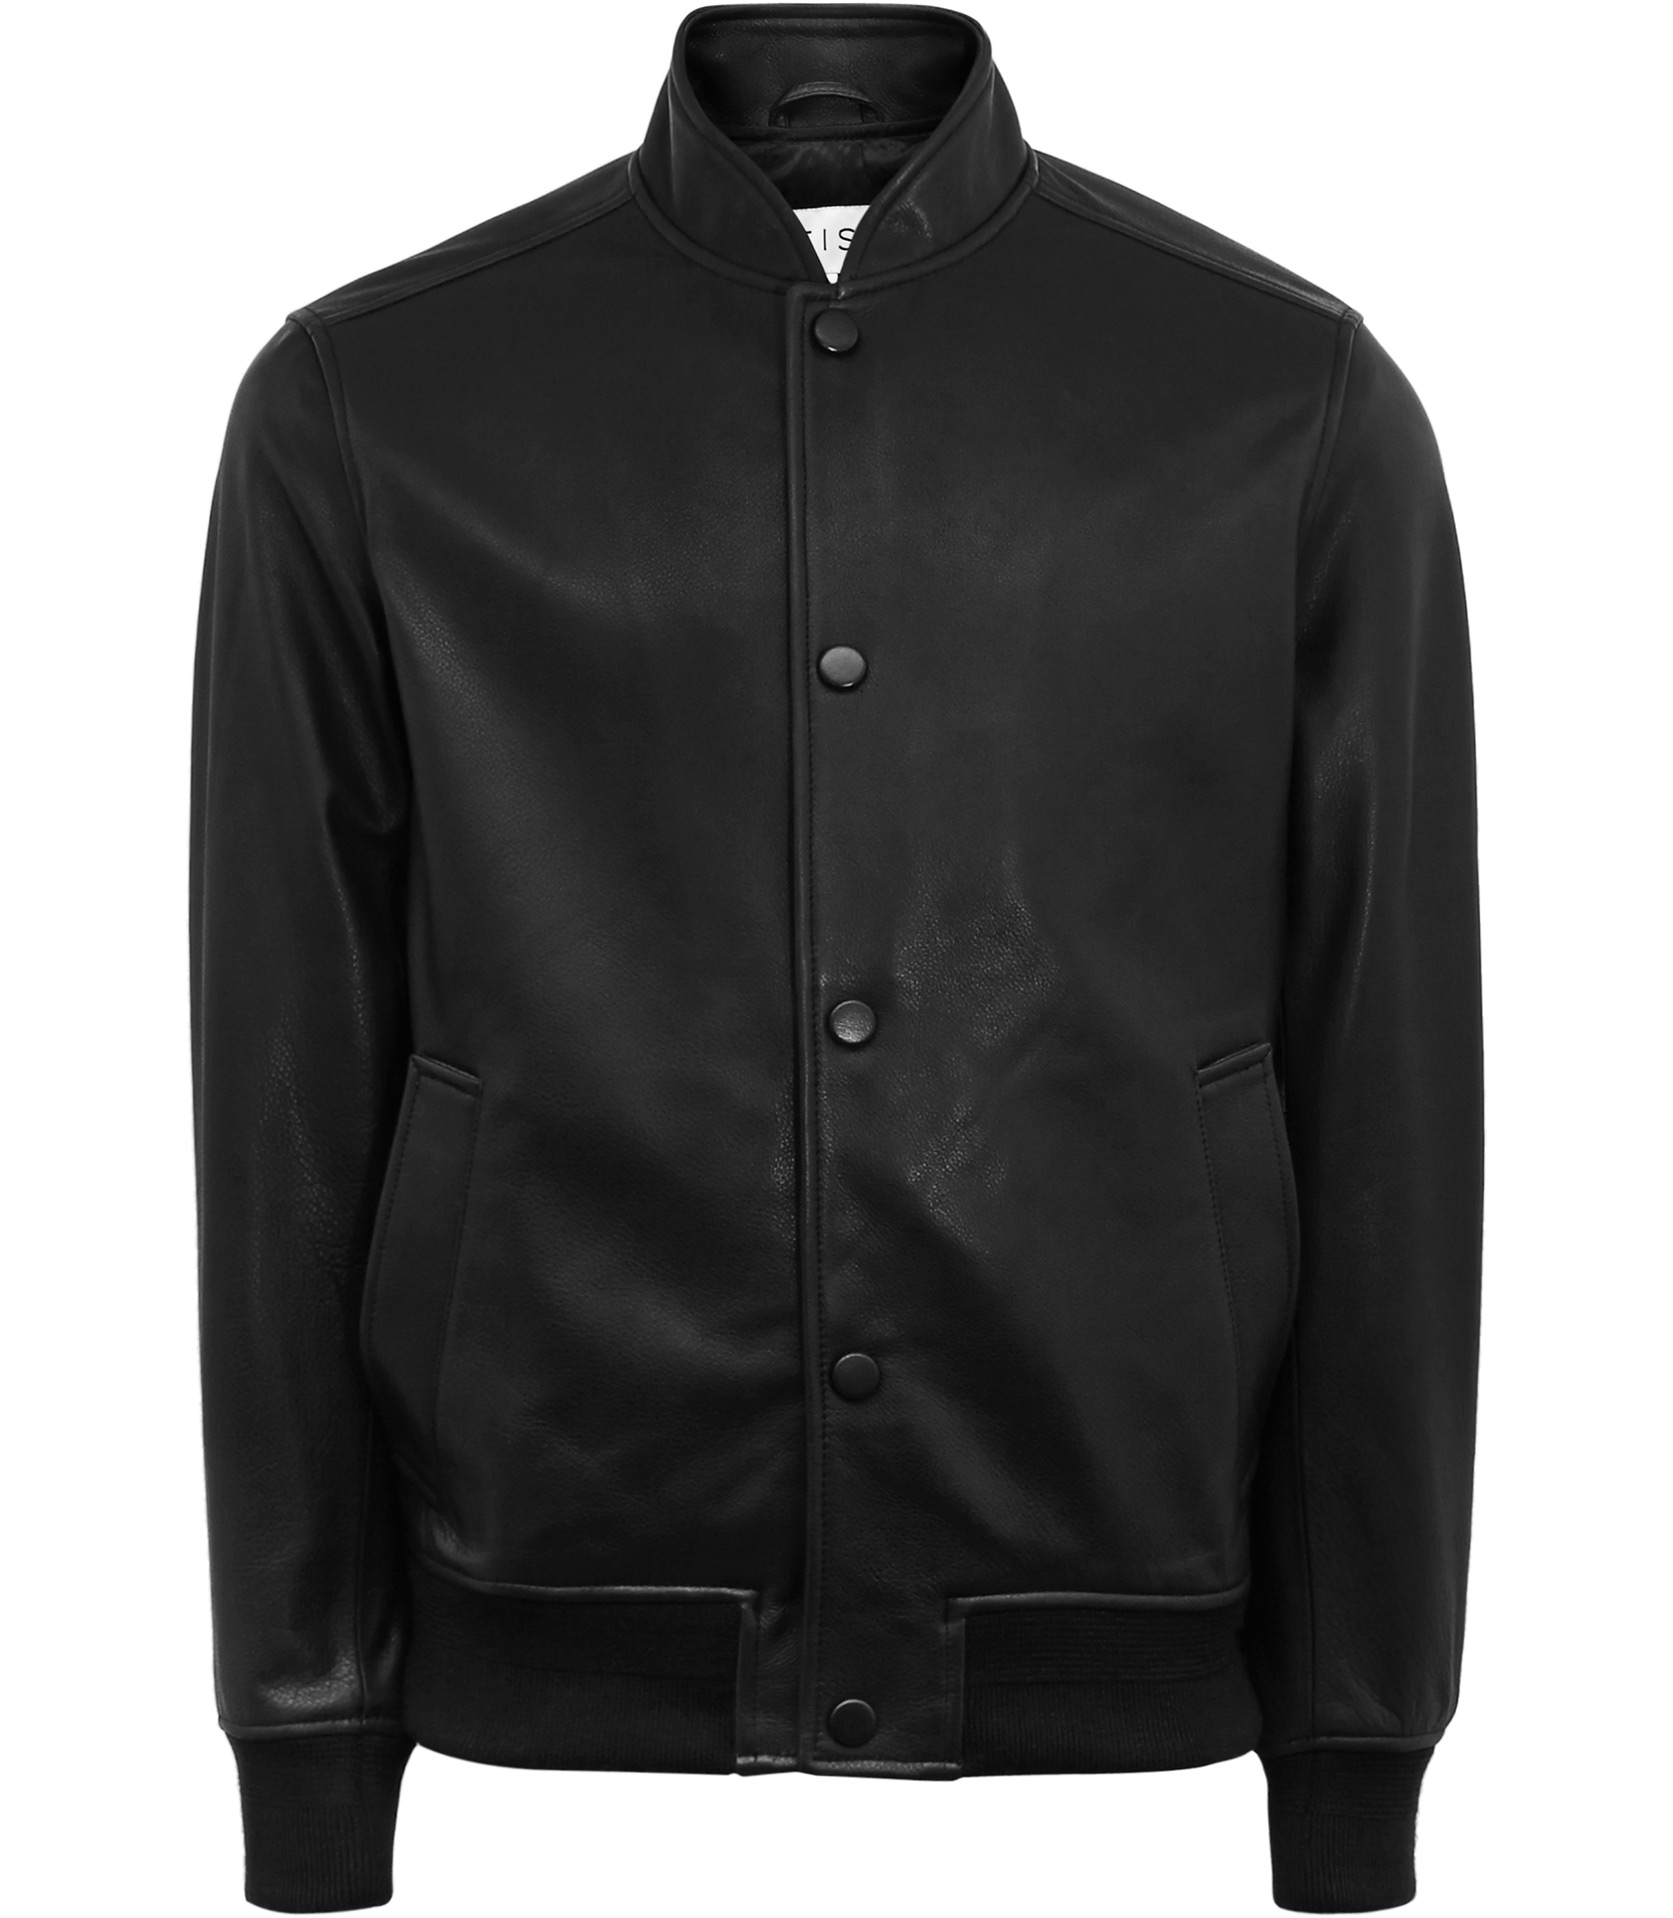 Lyst - Reiss Hove Leather Bomber Jacket in Black for Men